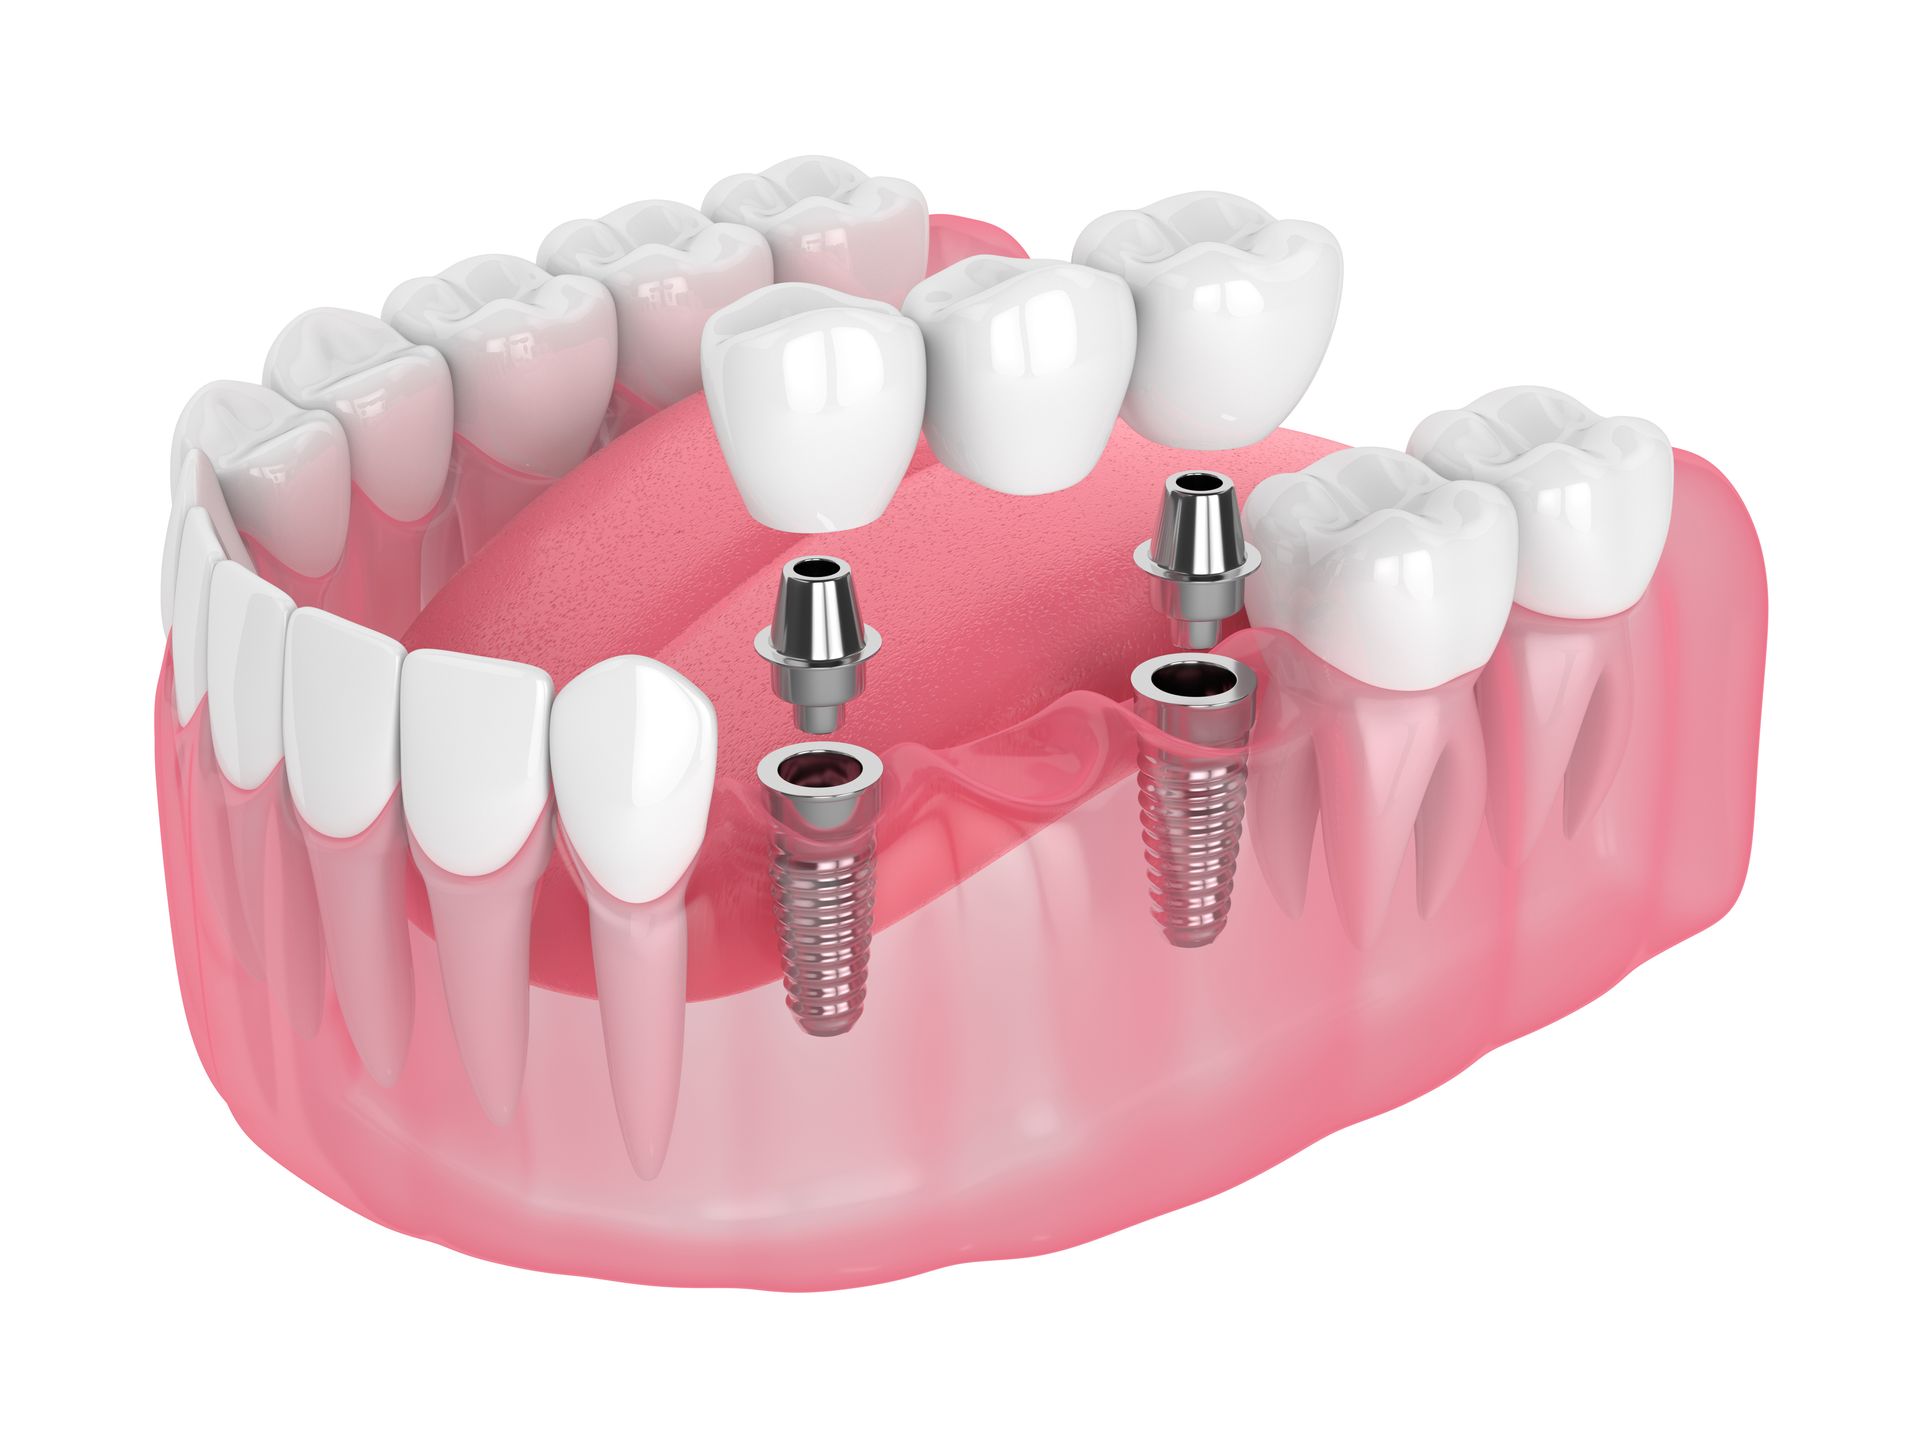 A 3d rendering of a dental bridge with dental implants.